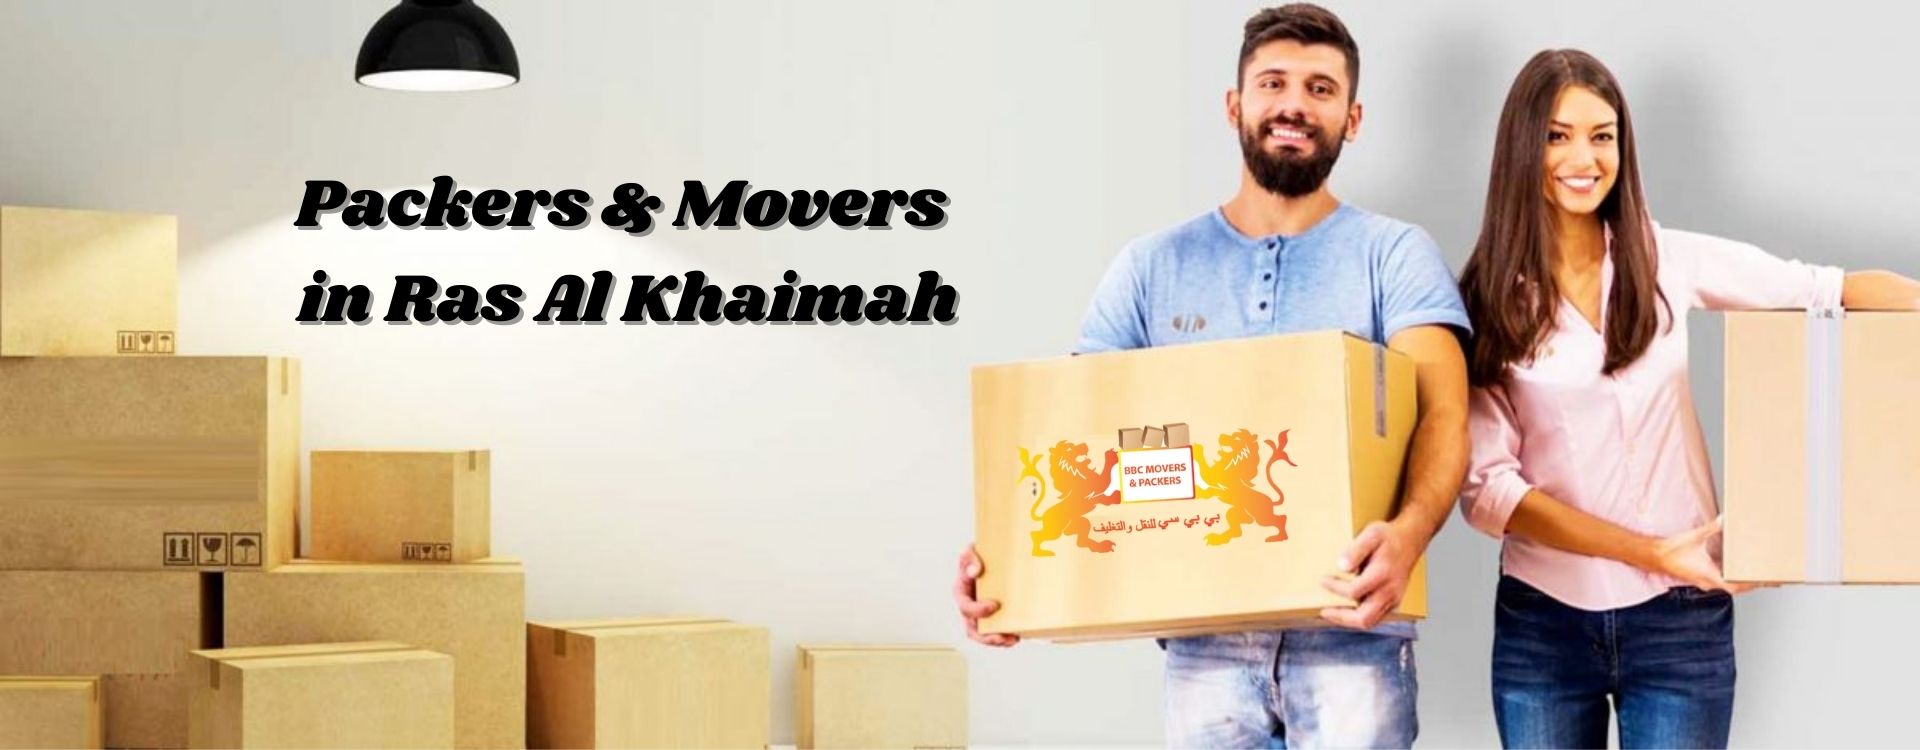 Packers & Movers in Ras Al Khaimah